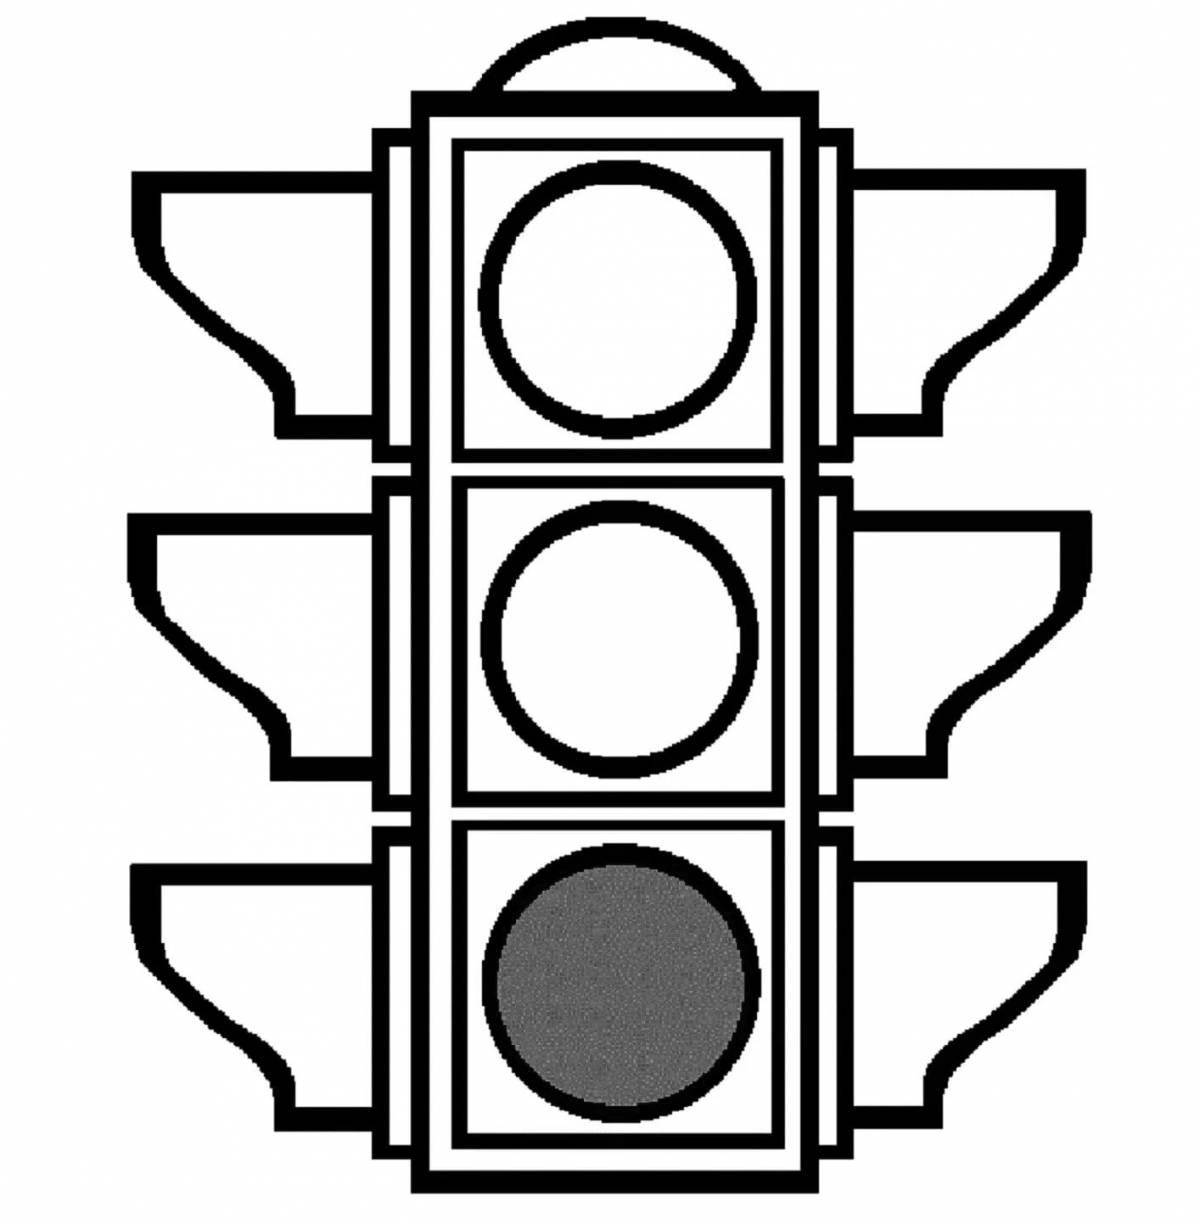 Hypnotic traffic light with siren